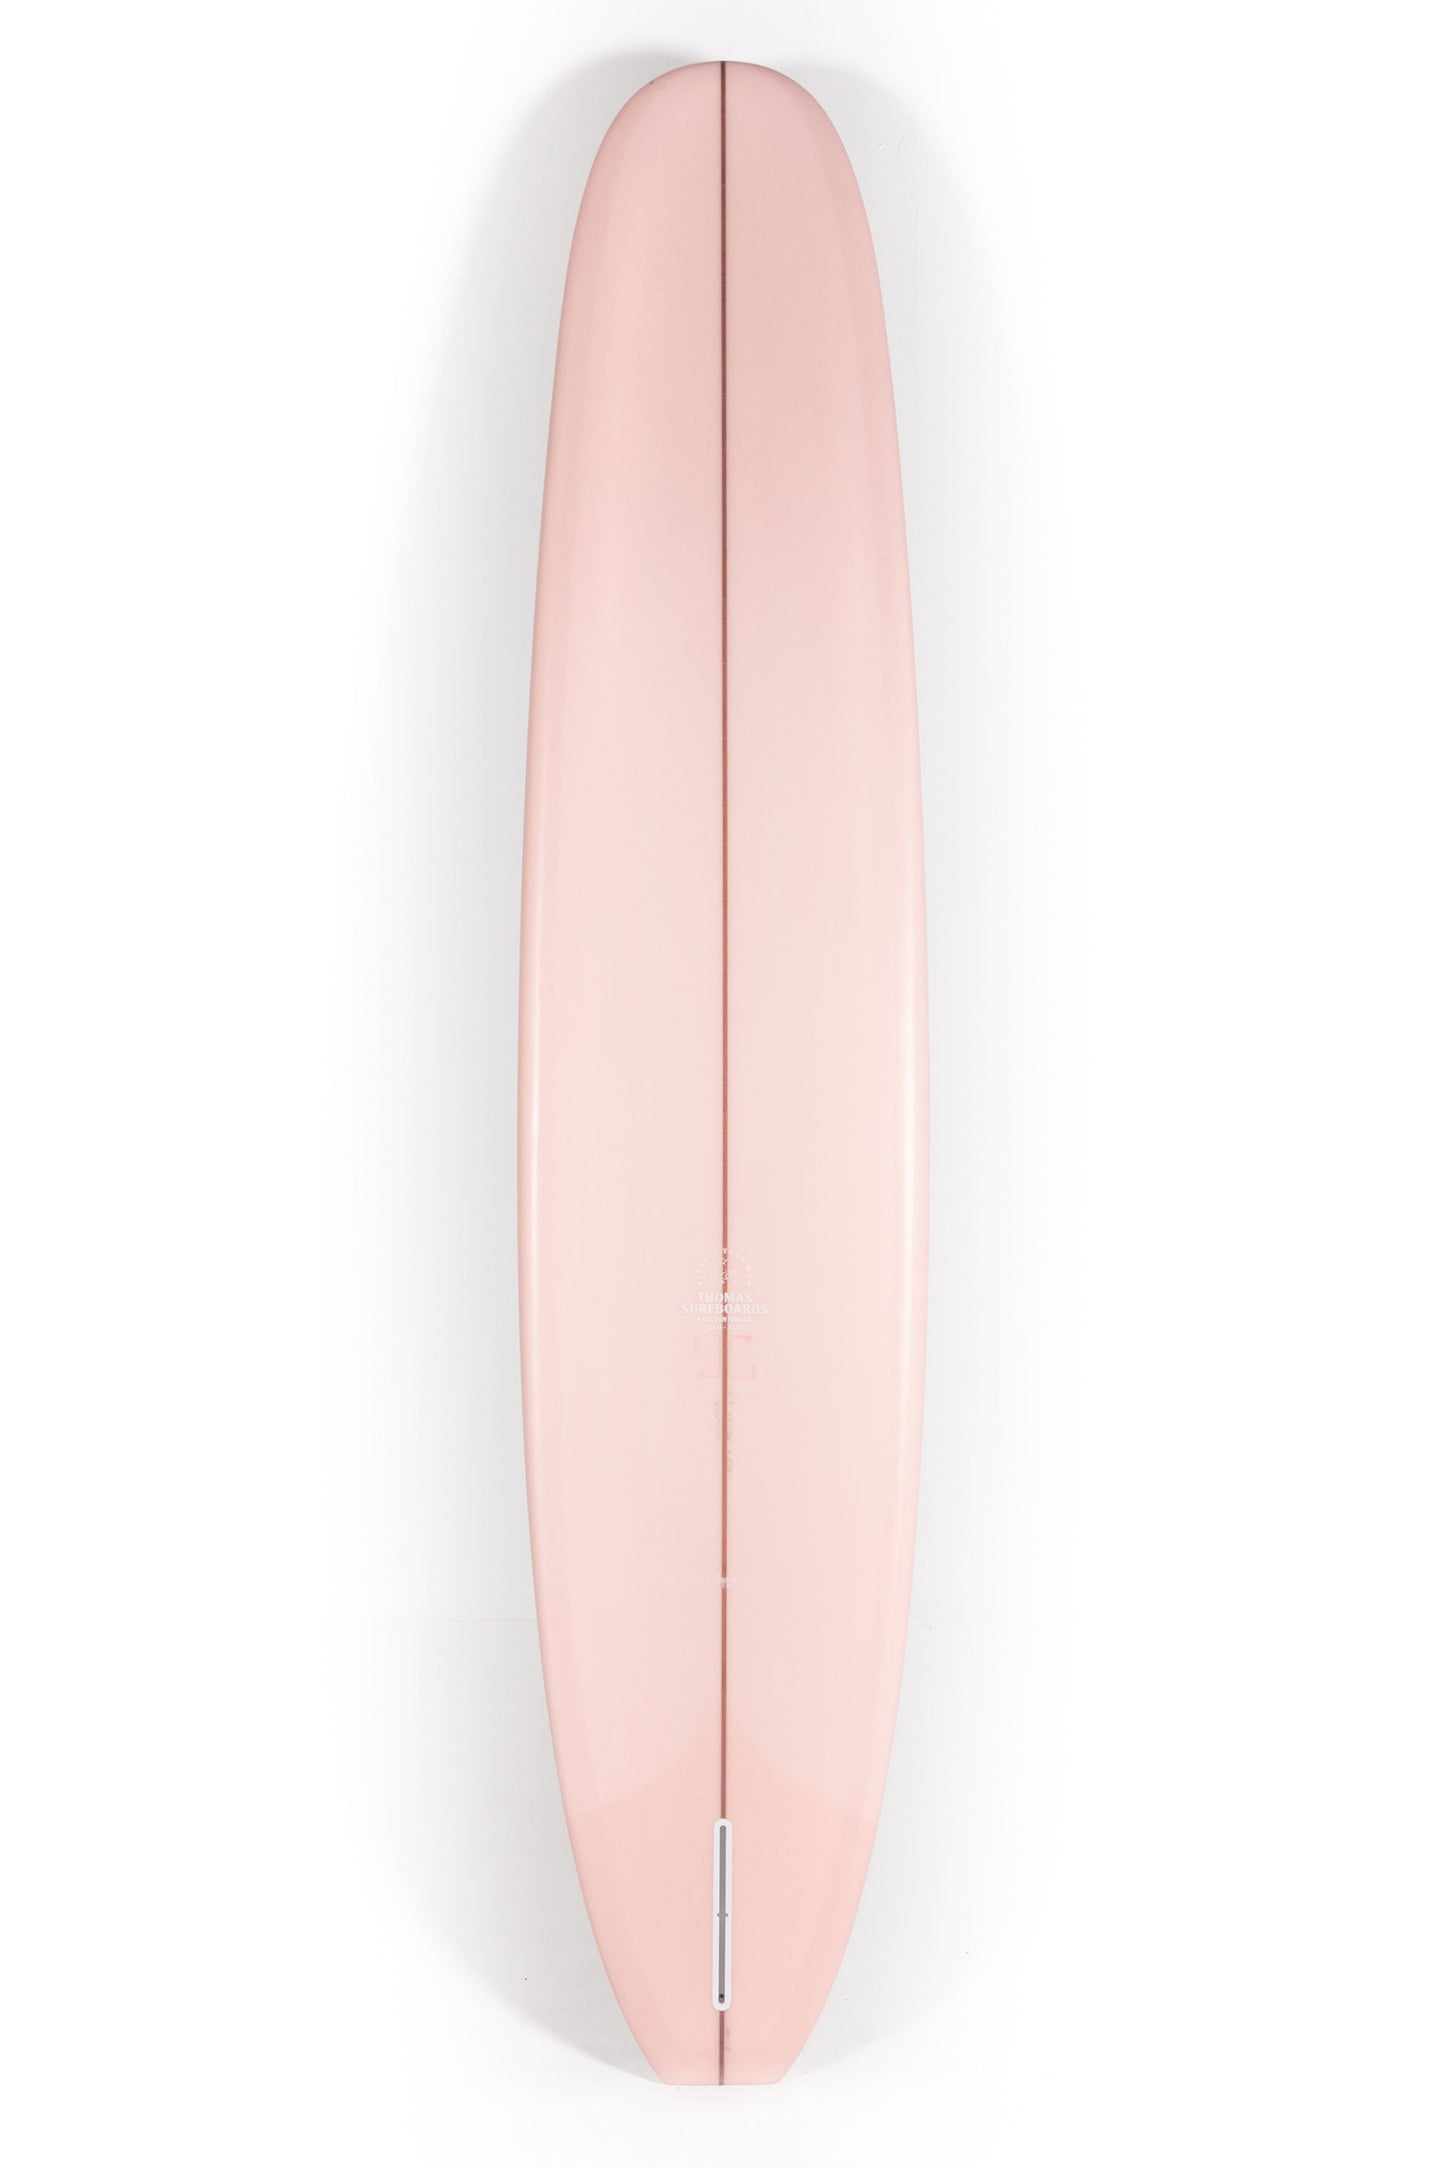 Pukas-Surf-Shop-Thomas-Bexon-Surfboards-Keeper-Thomas-Bexon-9_8